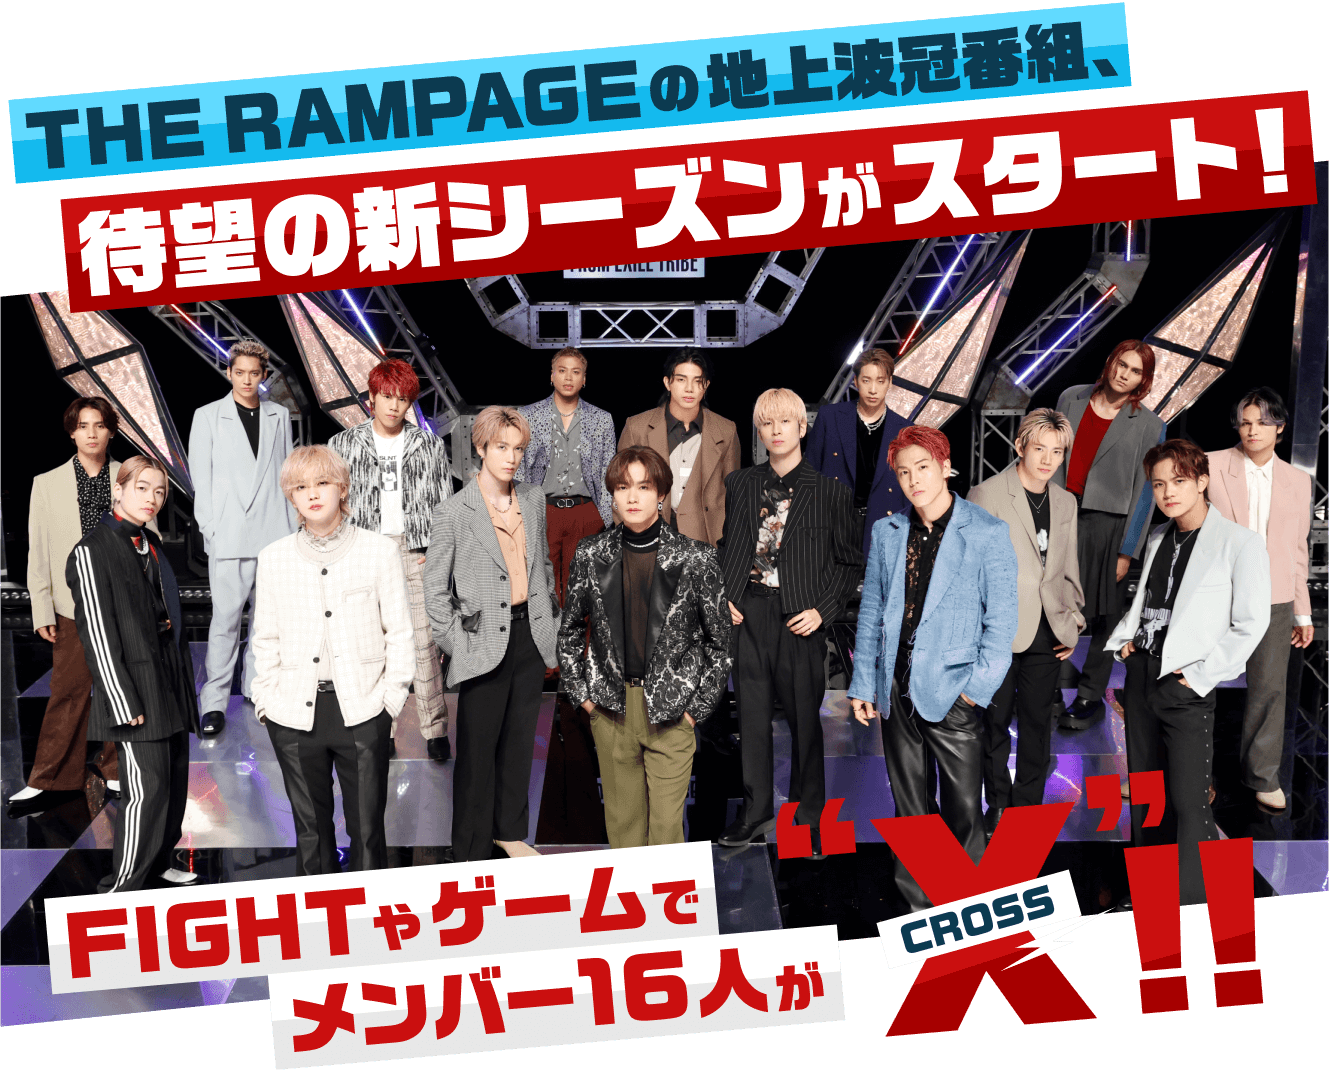 THE RAMPAGEの地上波冠番組、待望の新シーズンがスタート！FIGHTやゲームでメンバー16人が“X（CROSS）”！！